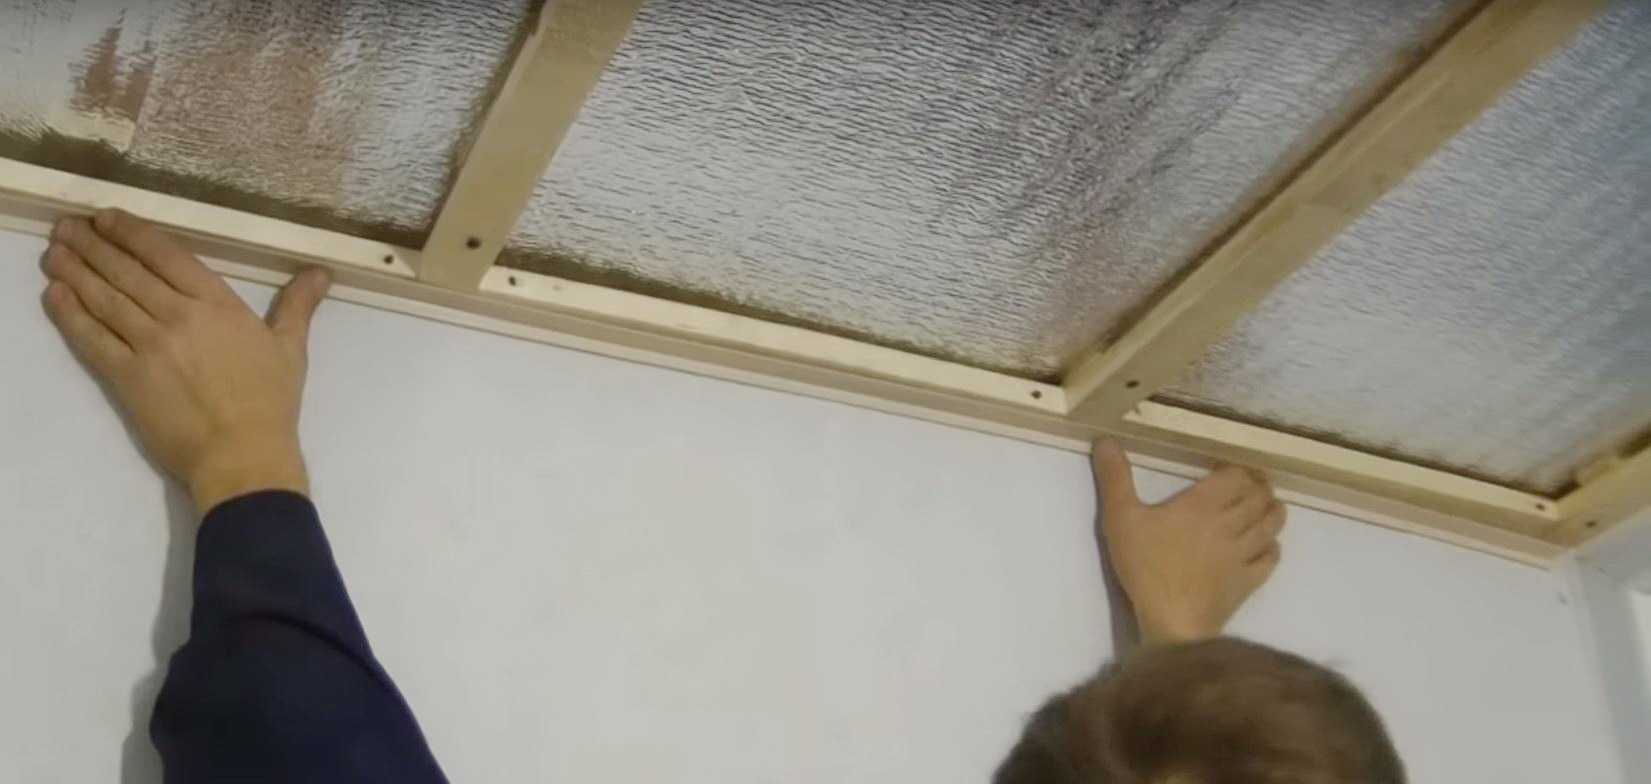 Обрешетка потолка под панели. Обрешетка потолка под пластиковые панели. Деревянная обрешетка под панели ПВХ на потолок. Обрешетка под пластиковые панели на стены. Крепления профиля потолка под панели.